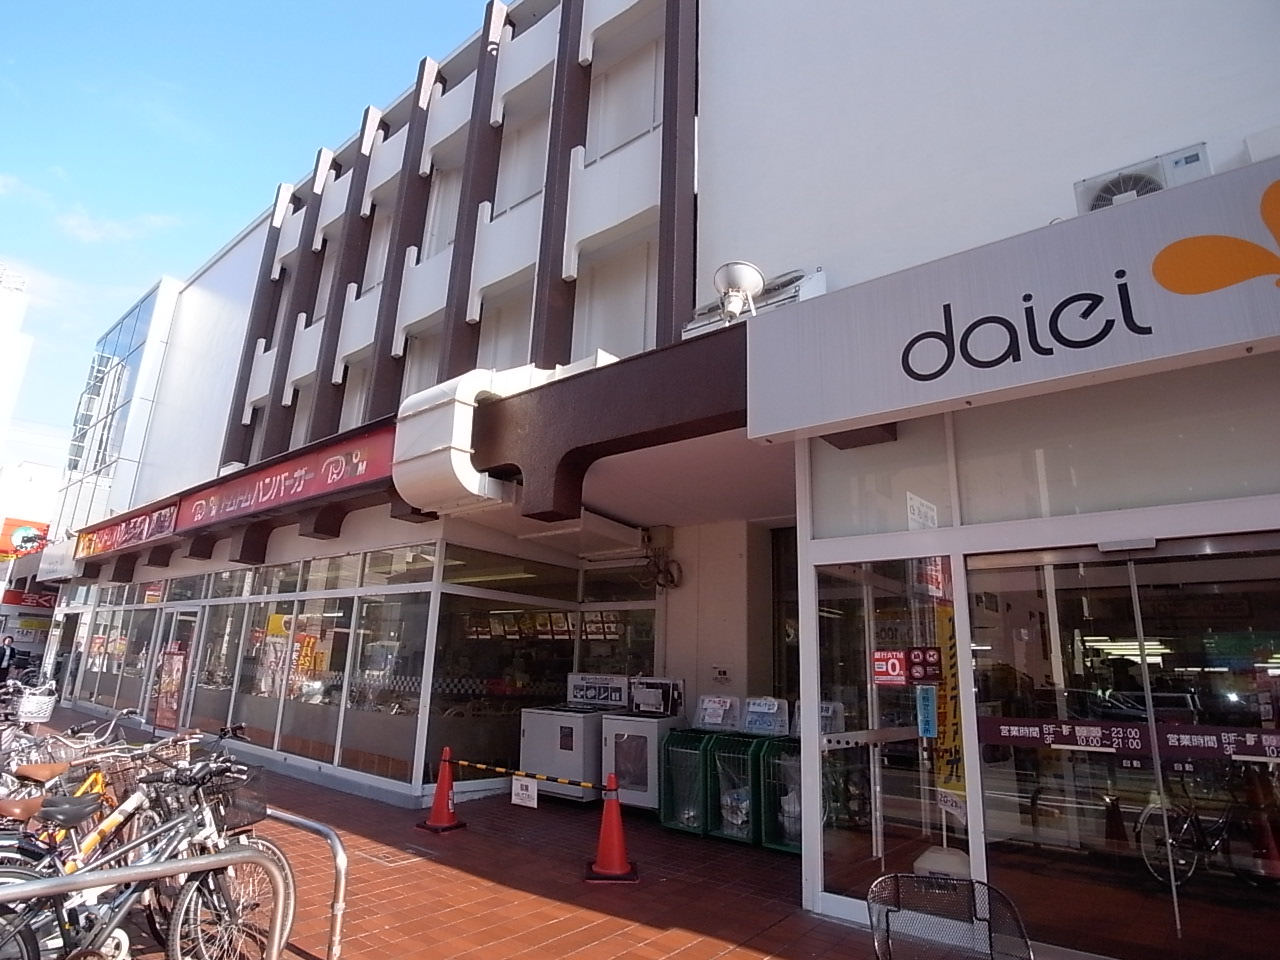 Supermarket. 246m to Daiei Imaike store (Super)